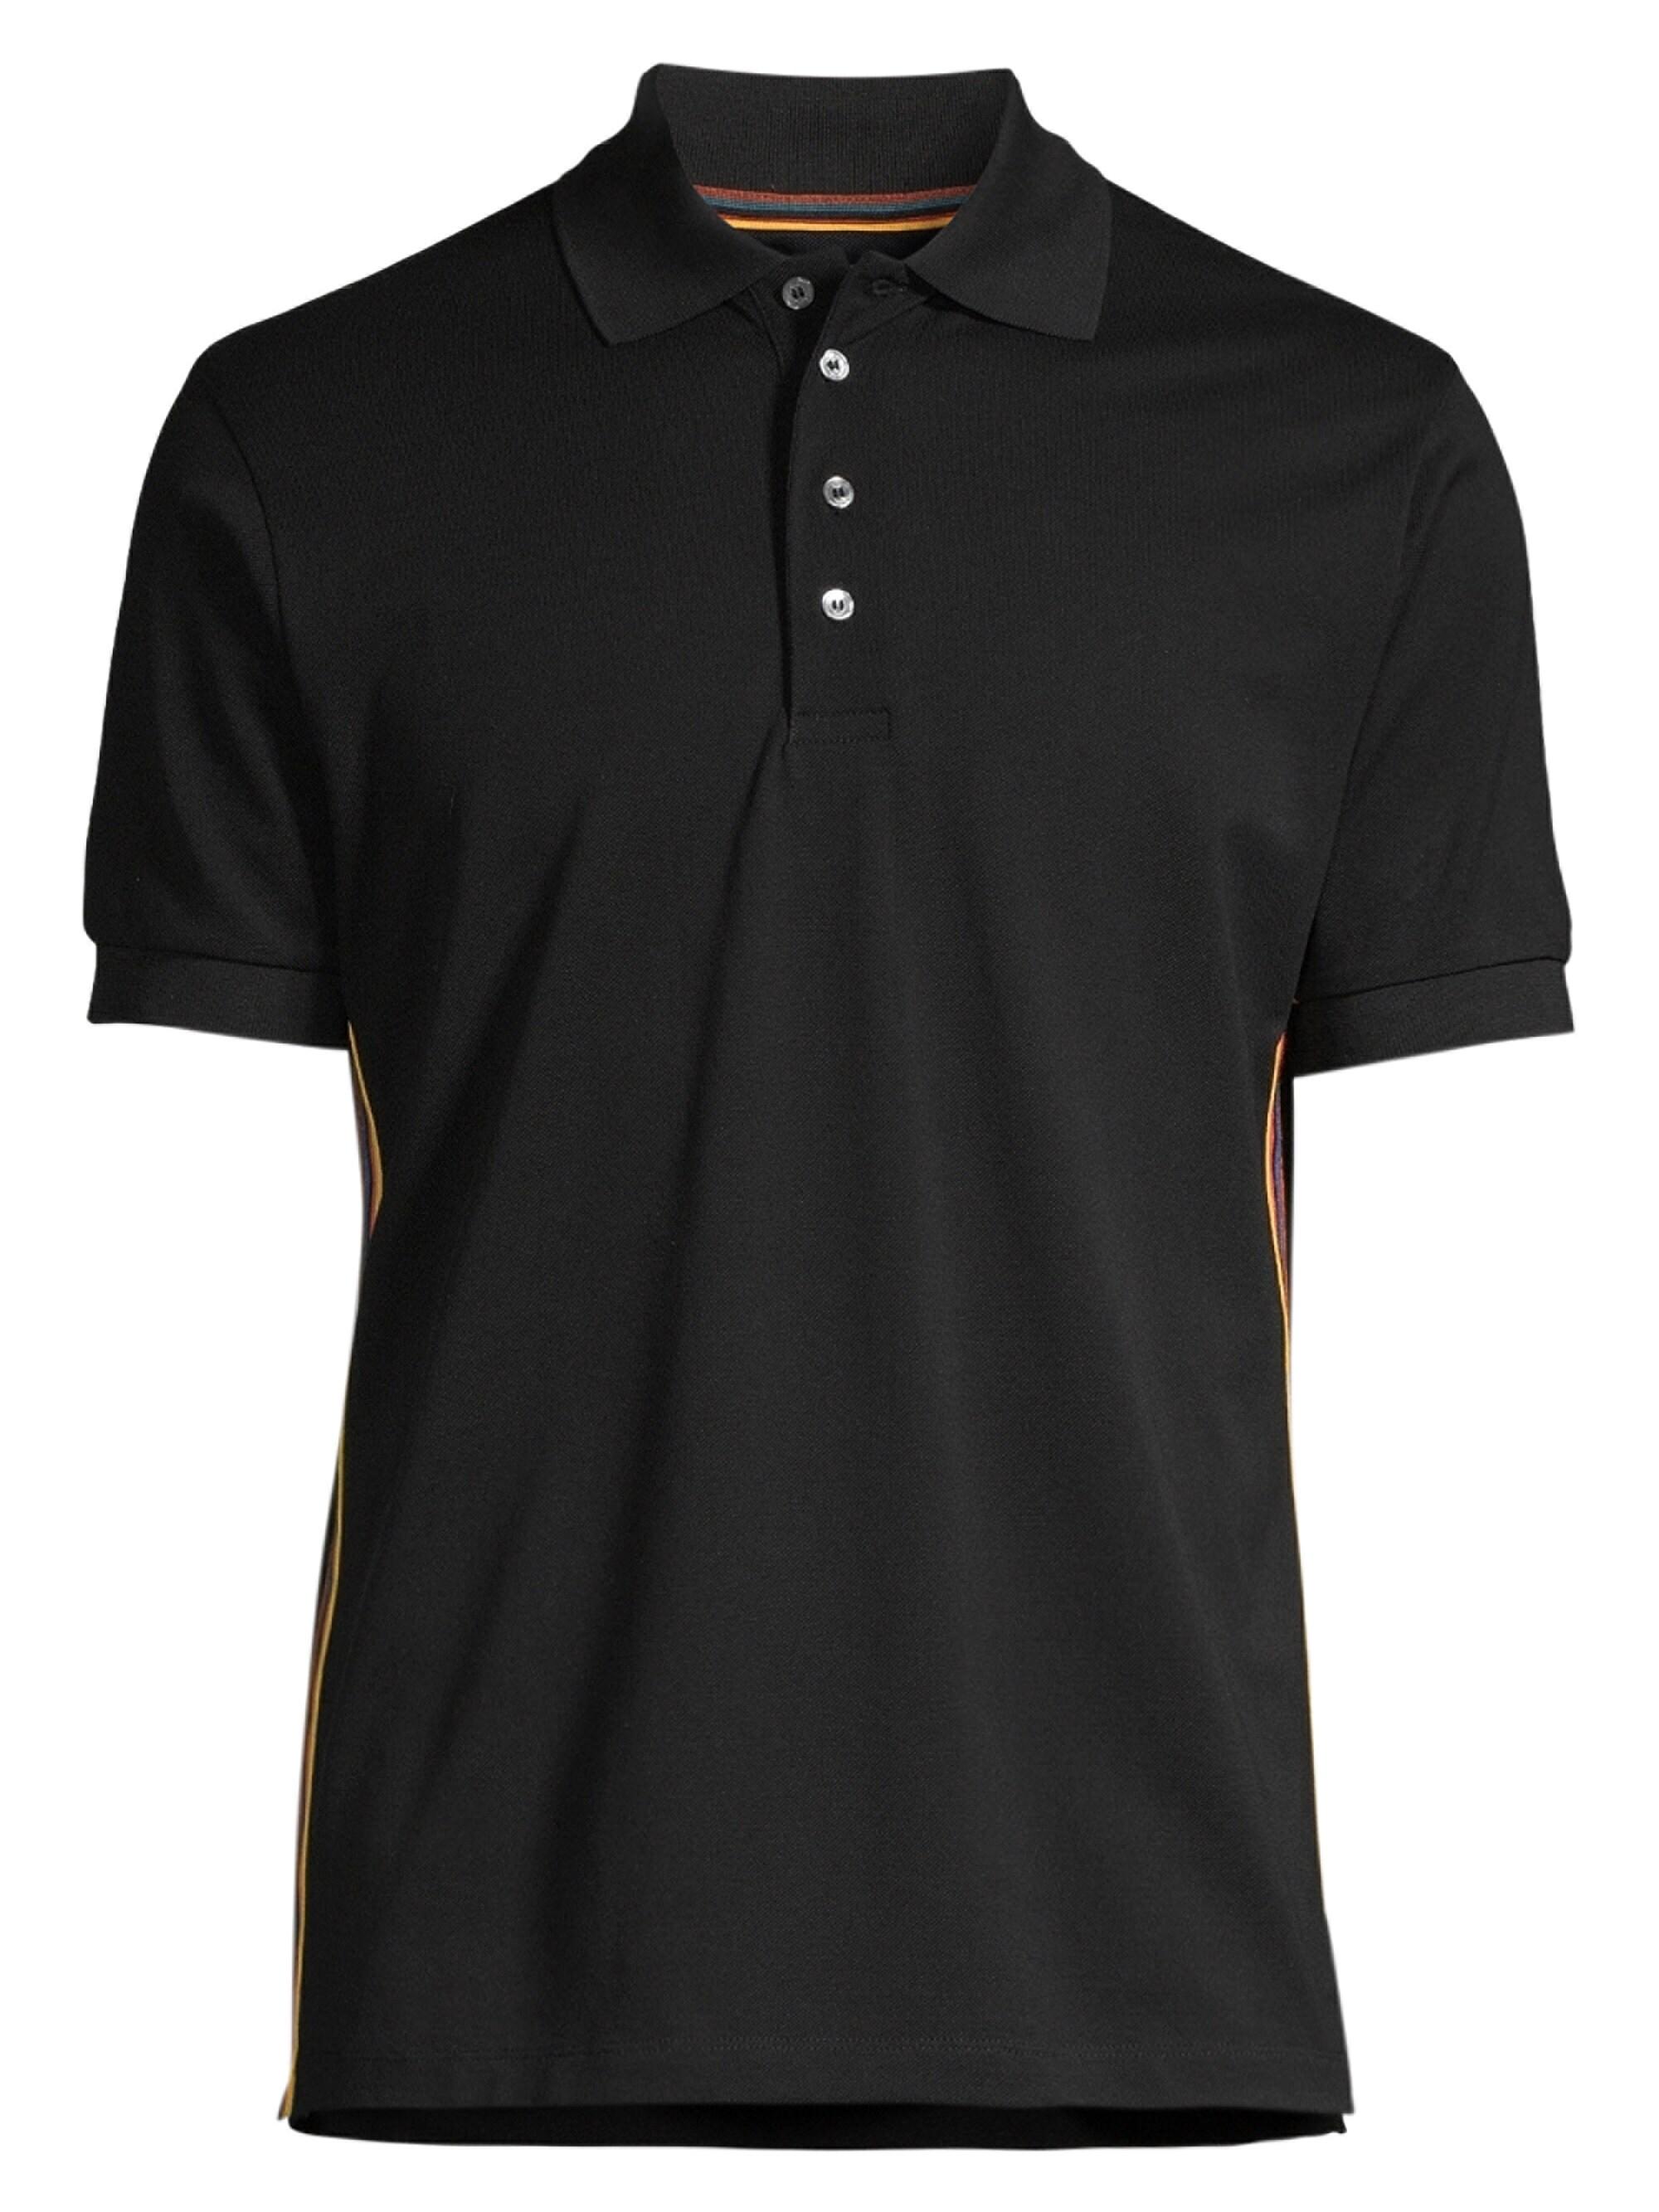 Paul Smith Artist Side Stripe Polo Shirt in Black for Men - Lyst